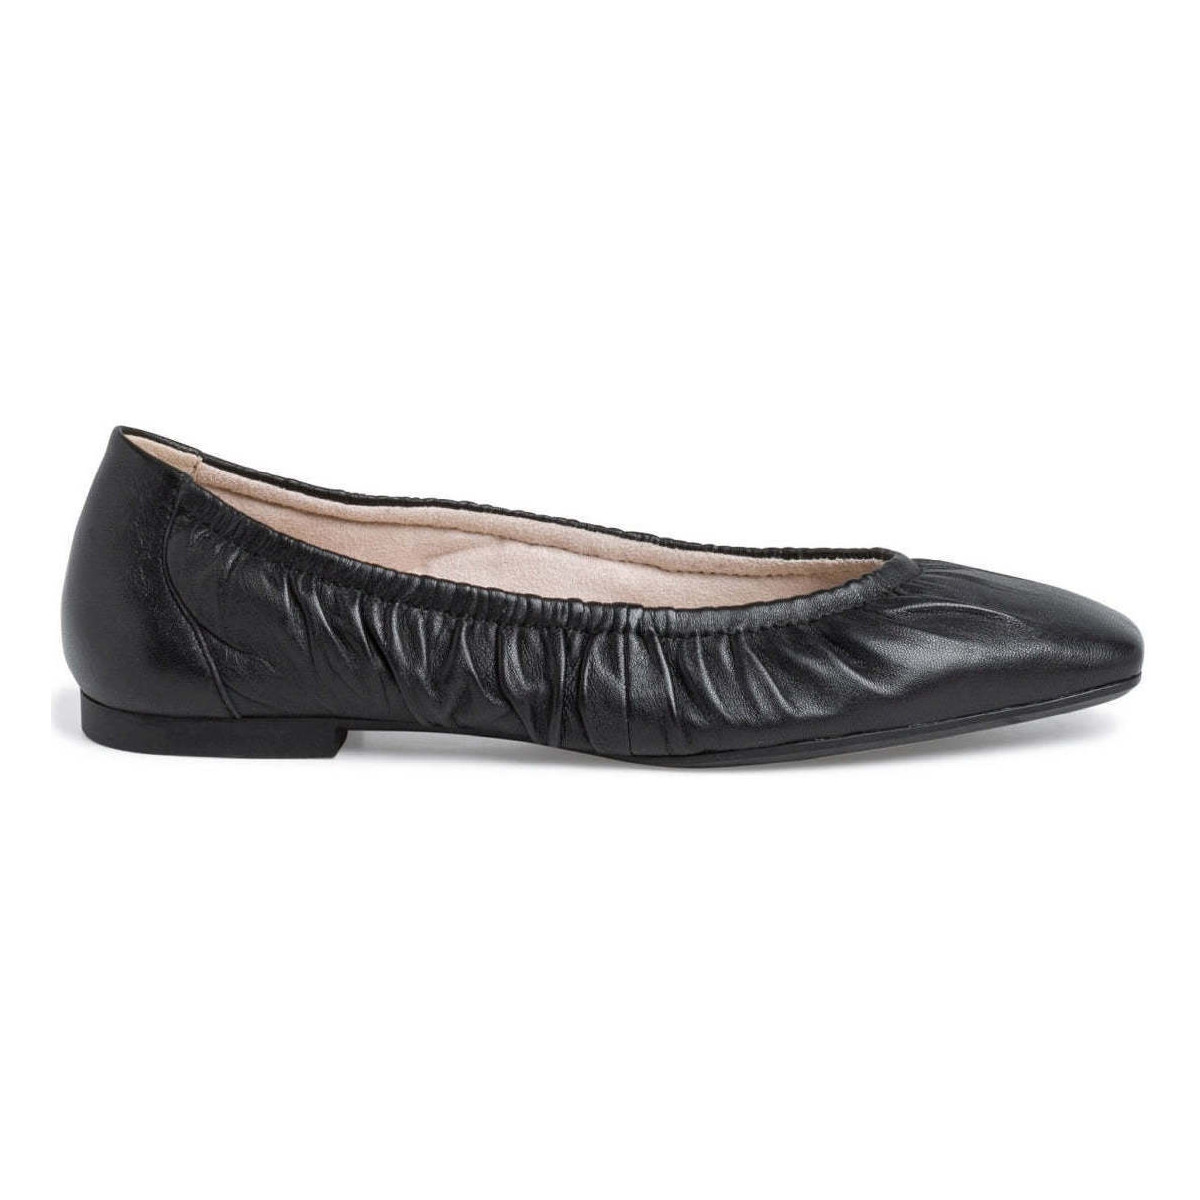 Chaussures Femme Ballerines / babies Tamaris black casual closed shoes Noir